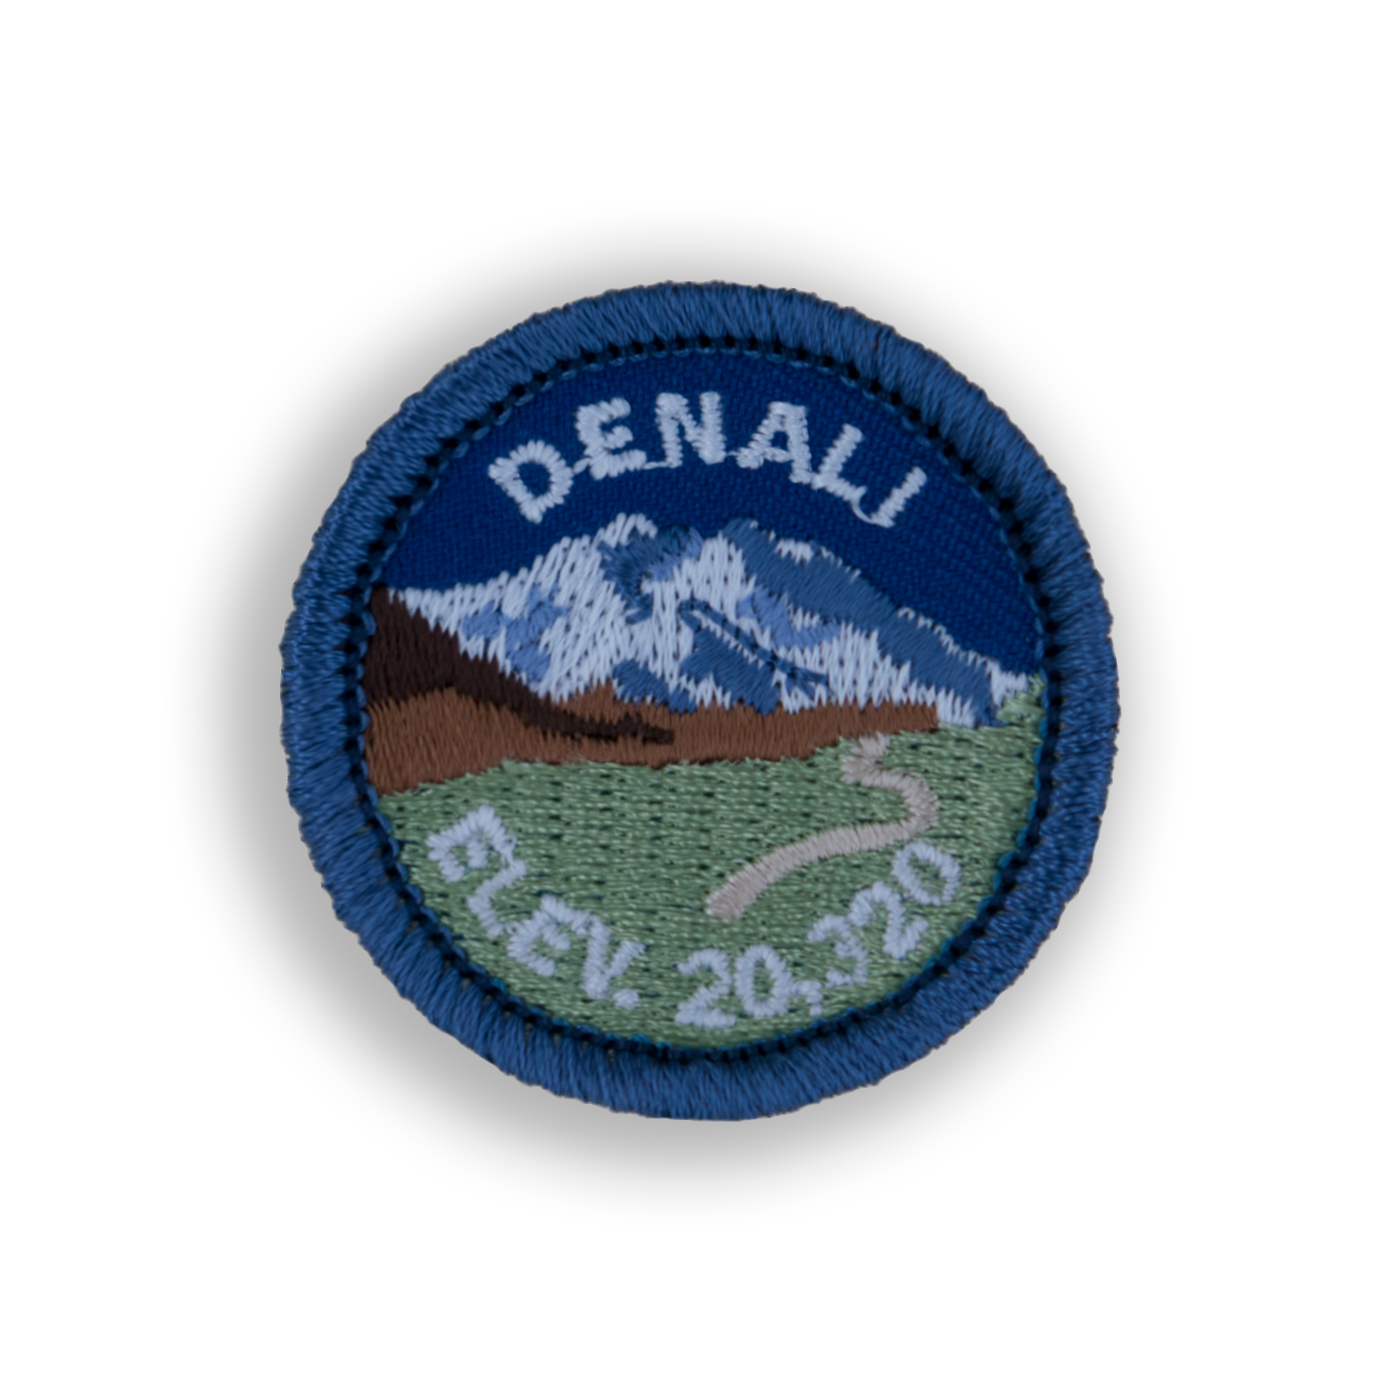 Denali Patch | Demerit Wear - Fake Merit Badges